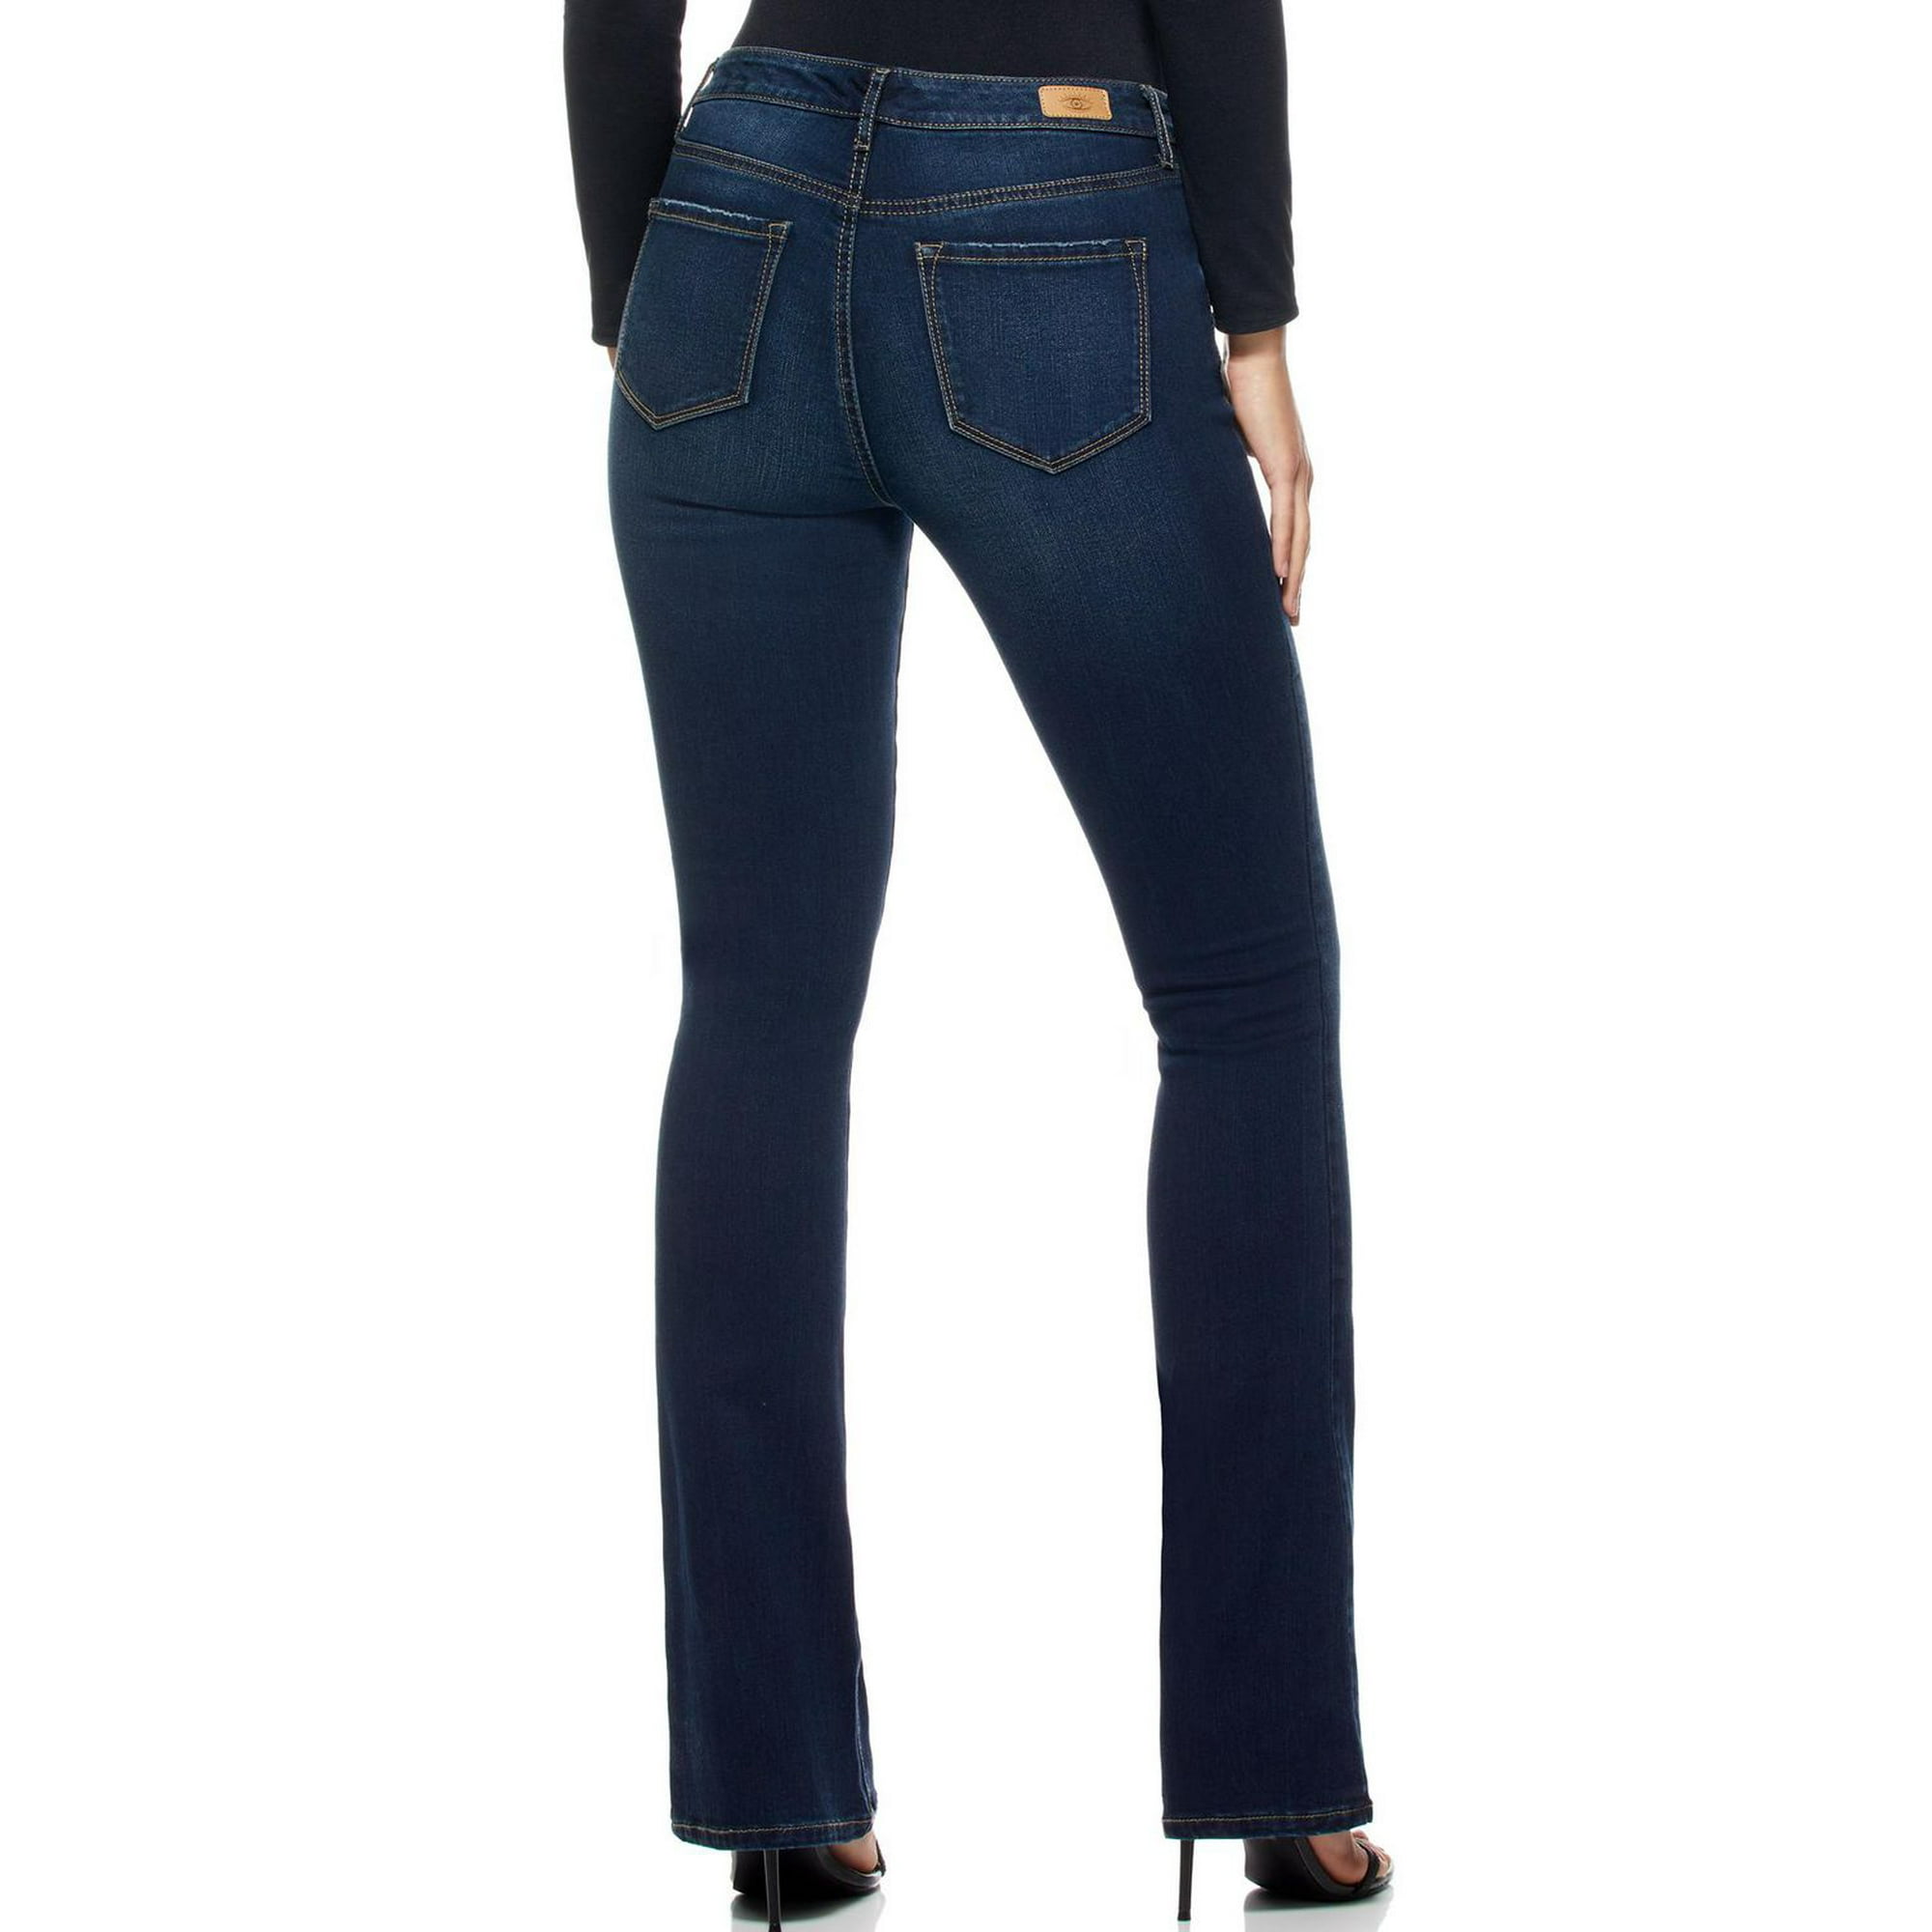 Sofia Vergara Looks to Spring in a Boho-Chic Dress & Her Classic Walmart  Jeans